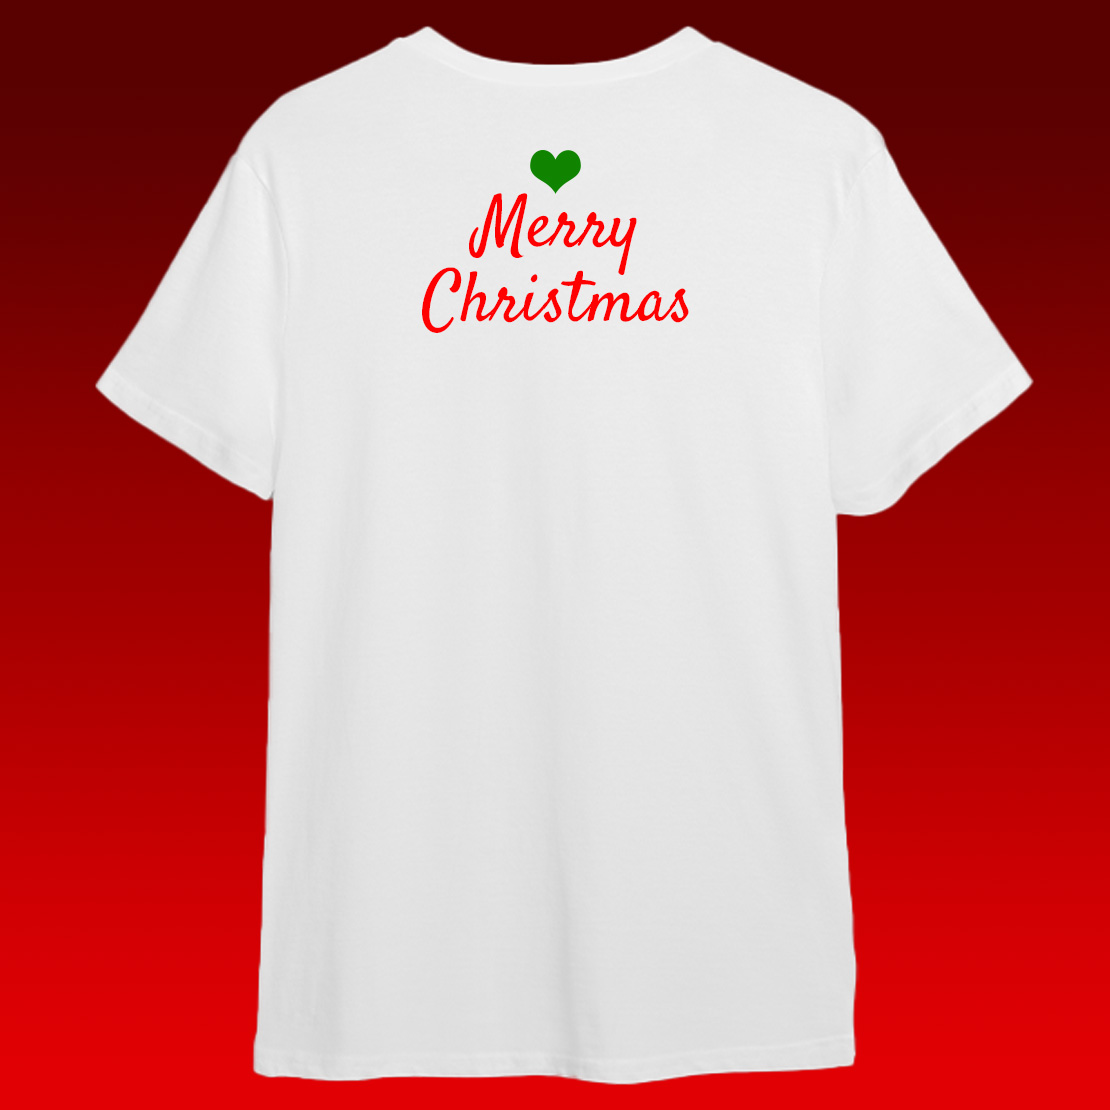 family christmas t shirt graphics preview image.